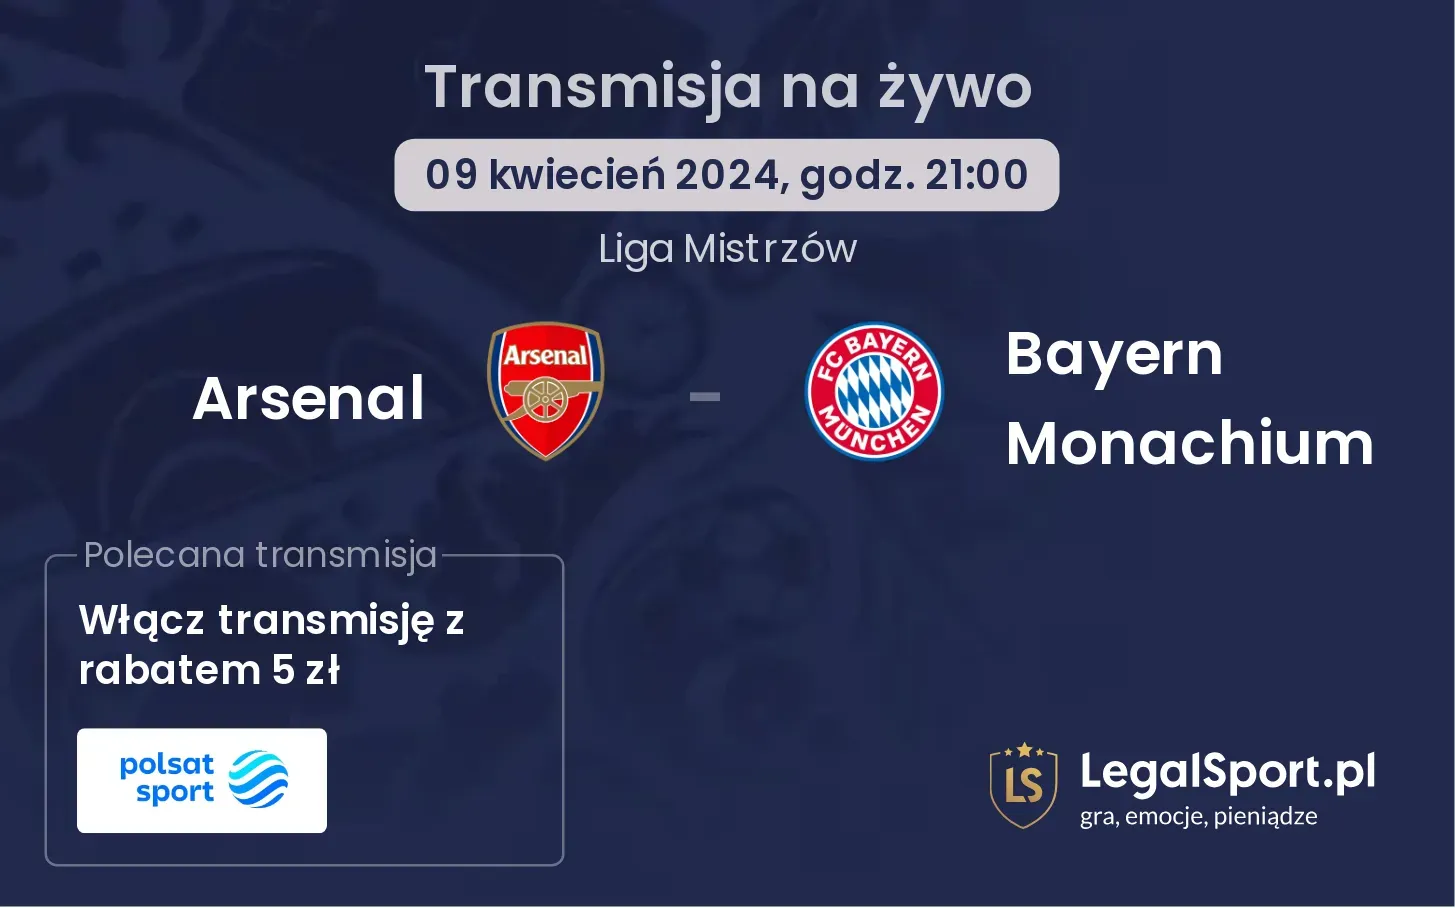 Arsenal - Bayern Monachium transmisja na żywo